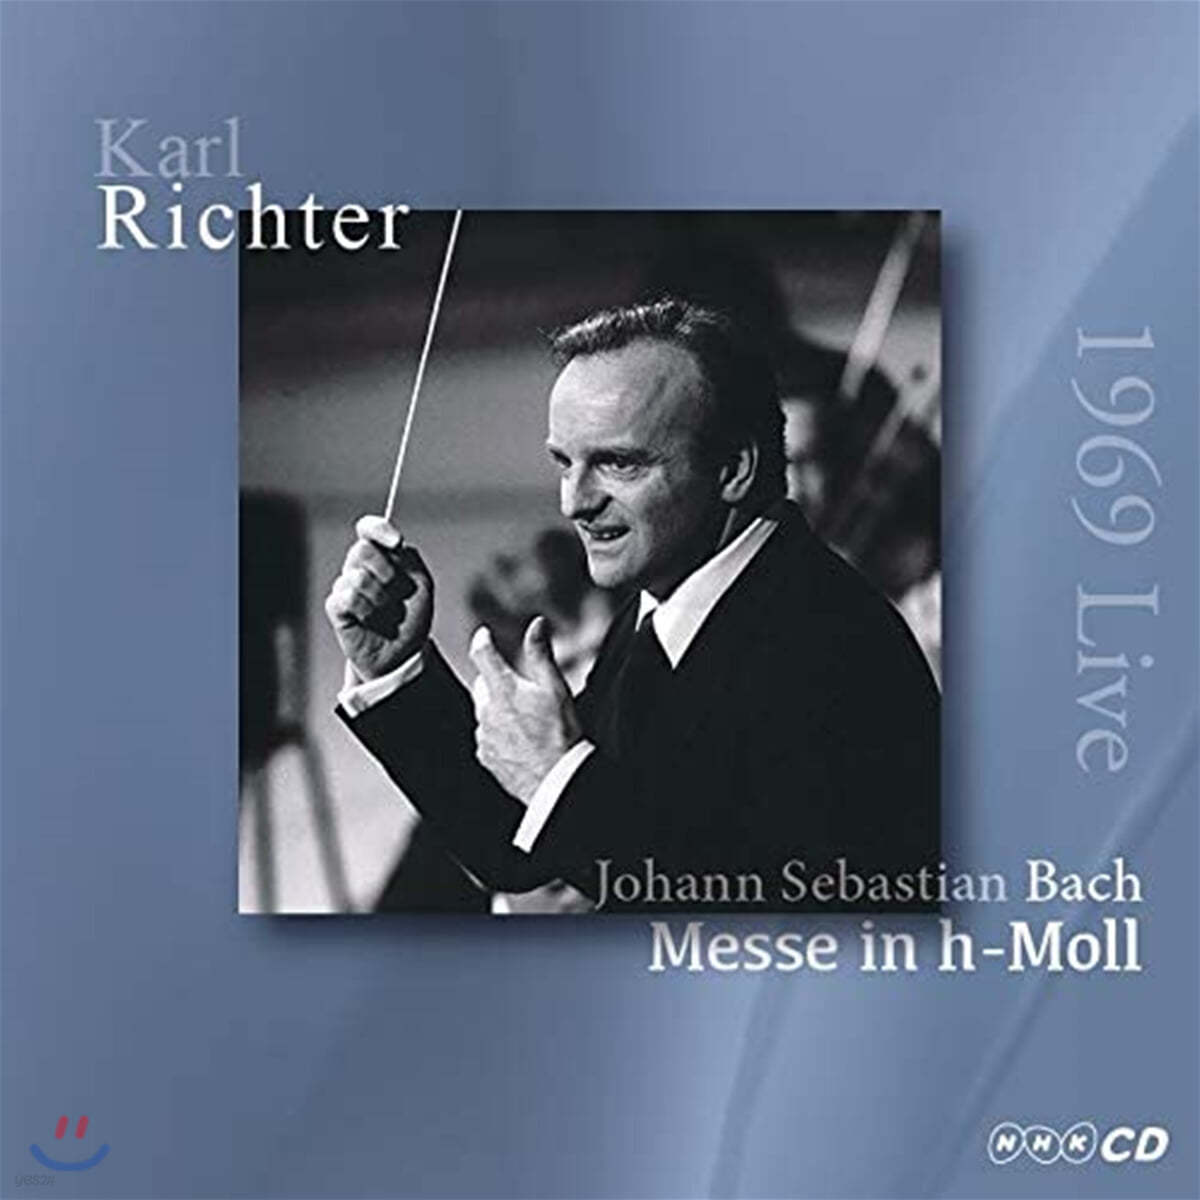 Karl Richter 바흐: 미사곡 - 칼 리히터 (Bach: Messe BWV232)